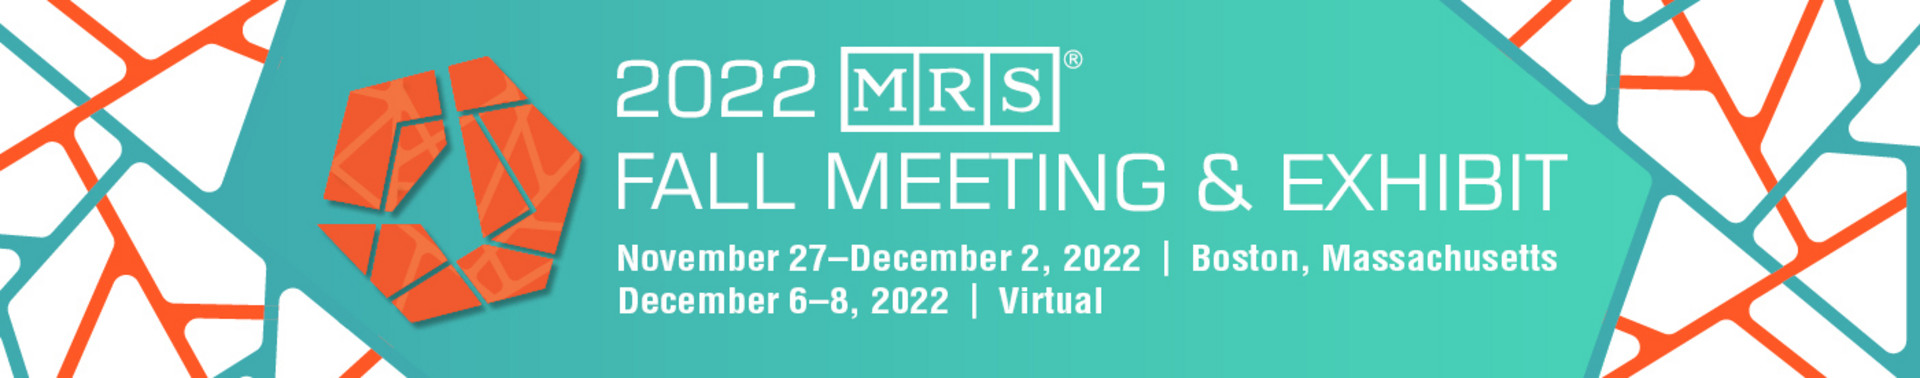 MRS Fall Meeting & Exhibition Logo